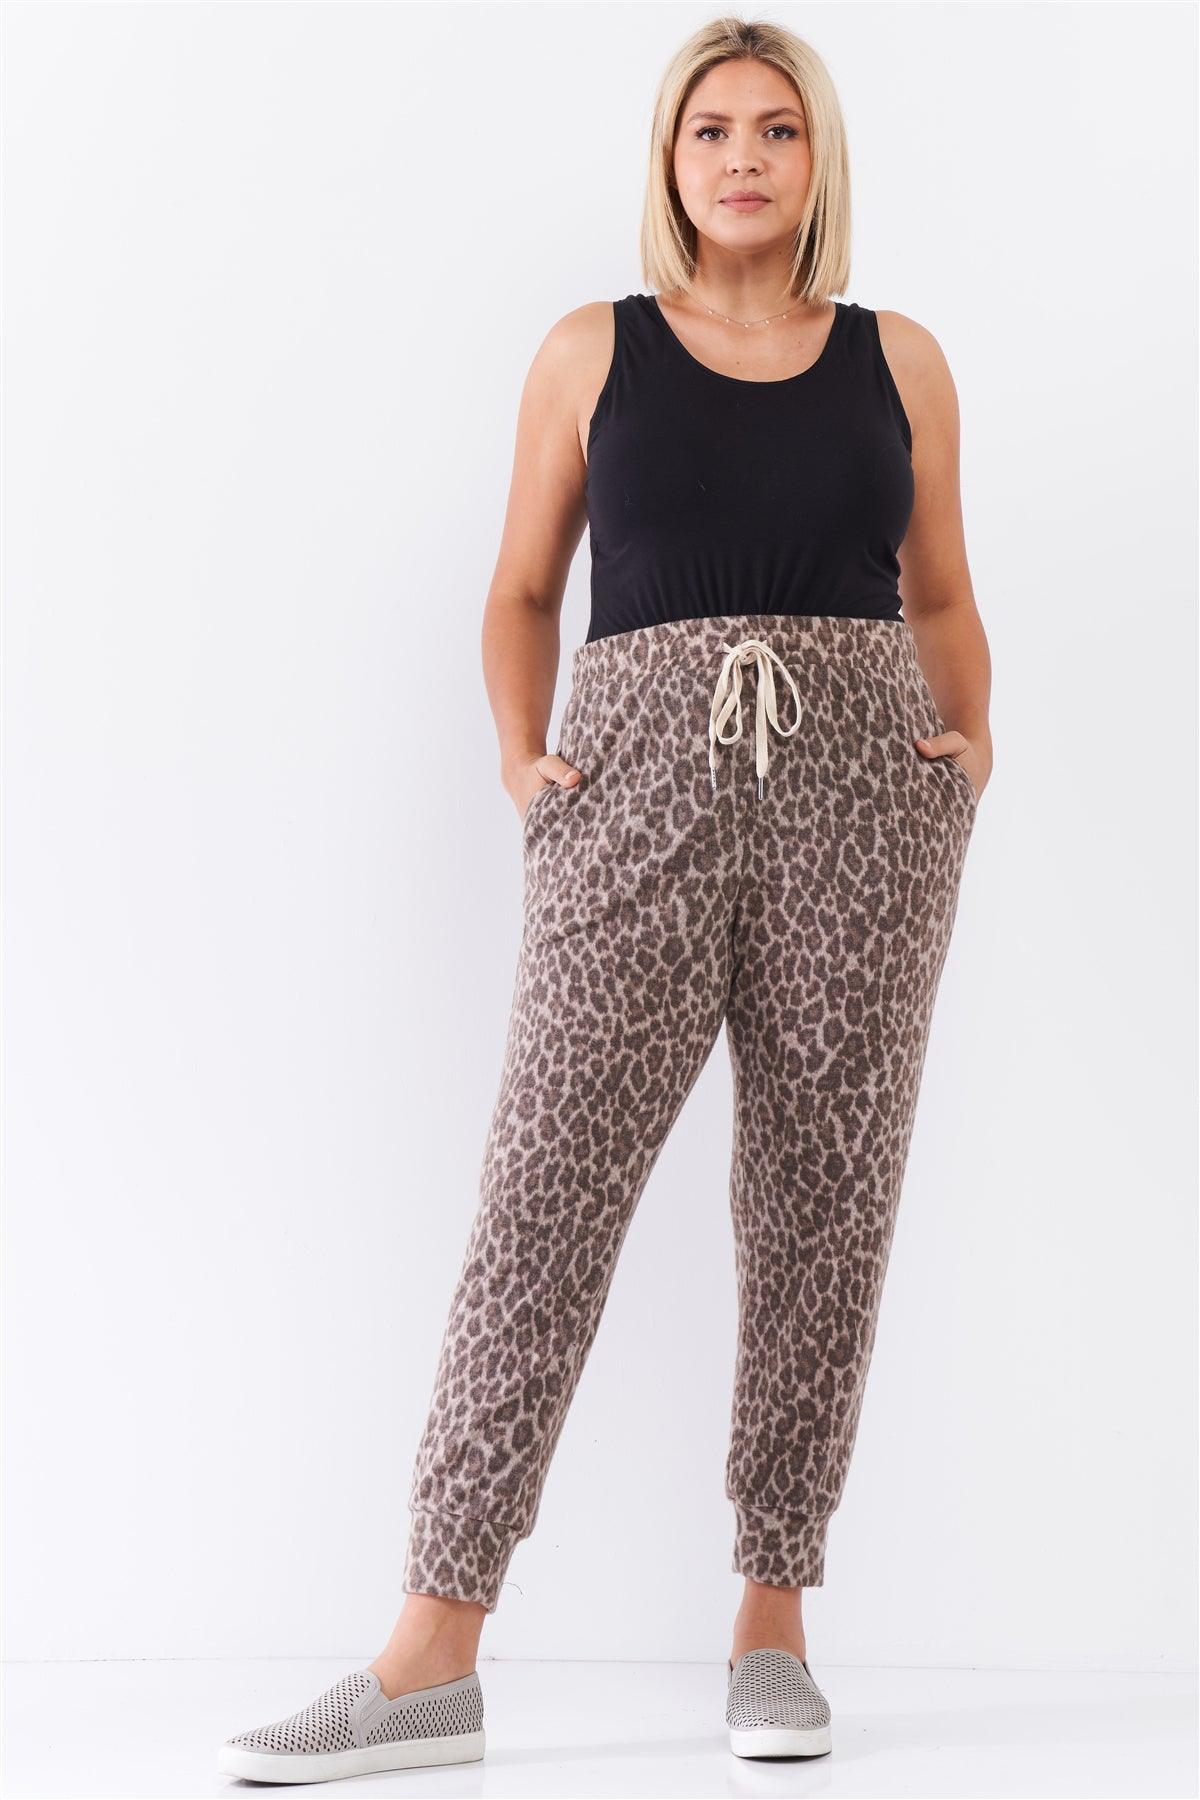 Taupe Brown Leopard Print Self-Tie High Waist Super Soft Lounge Pants /3-2-1